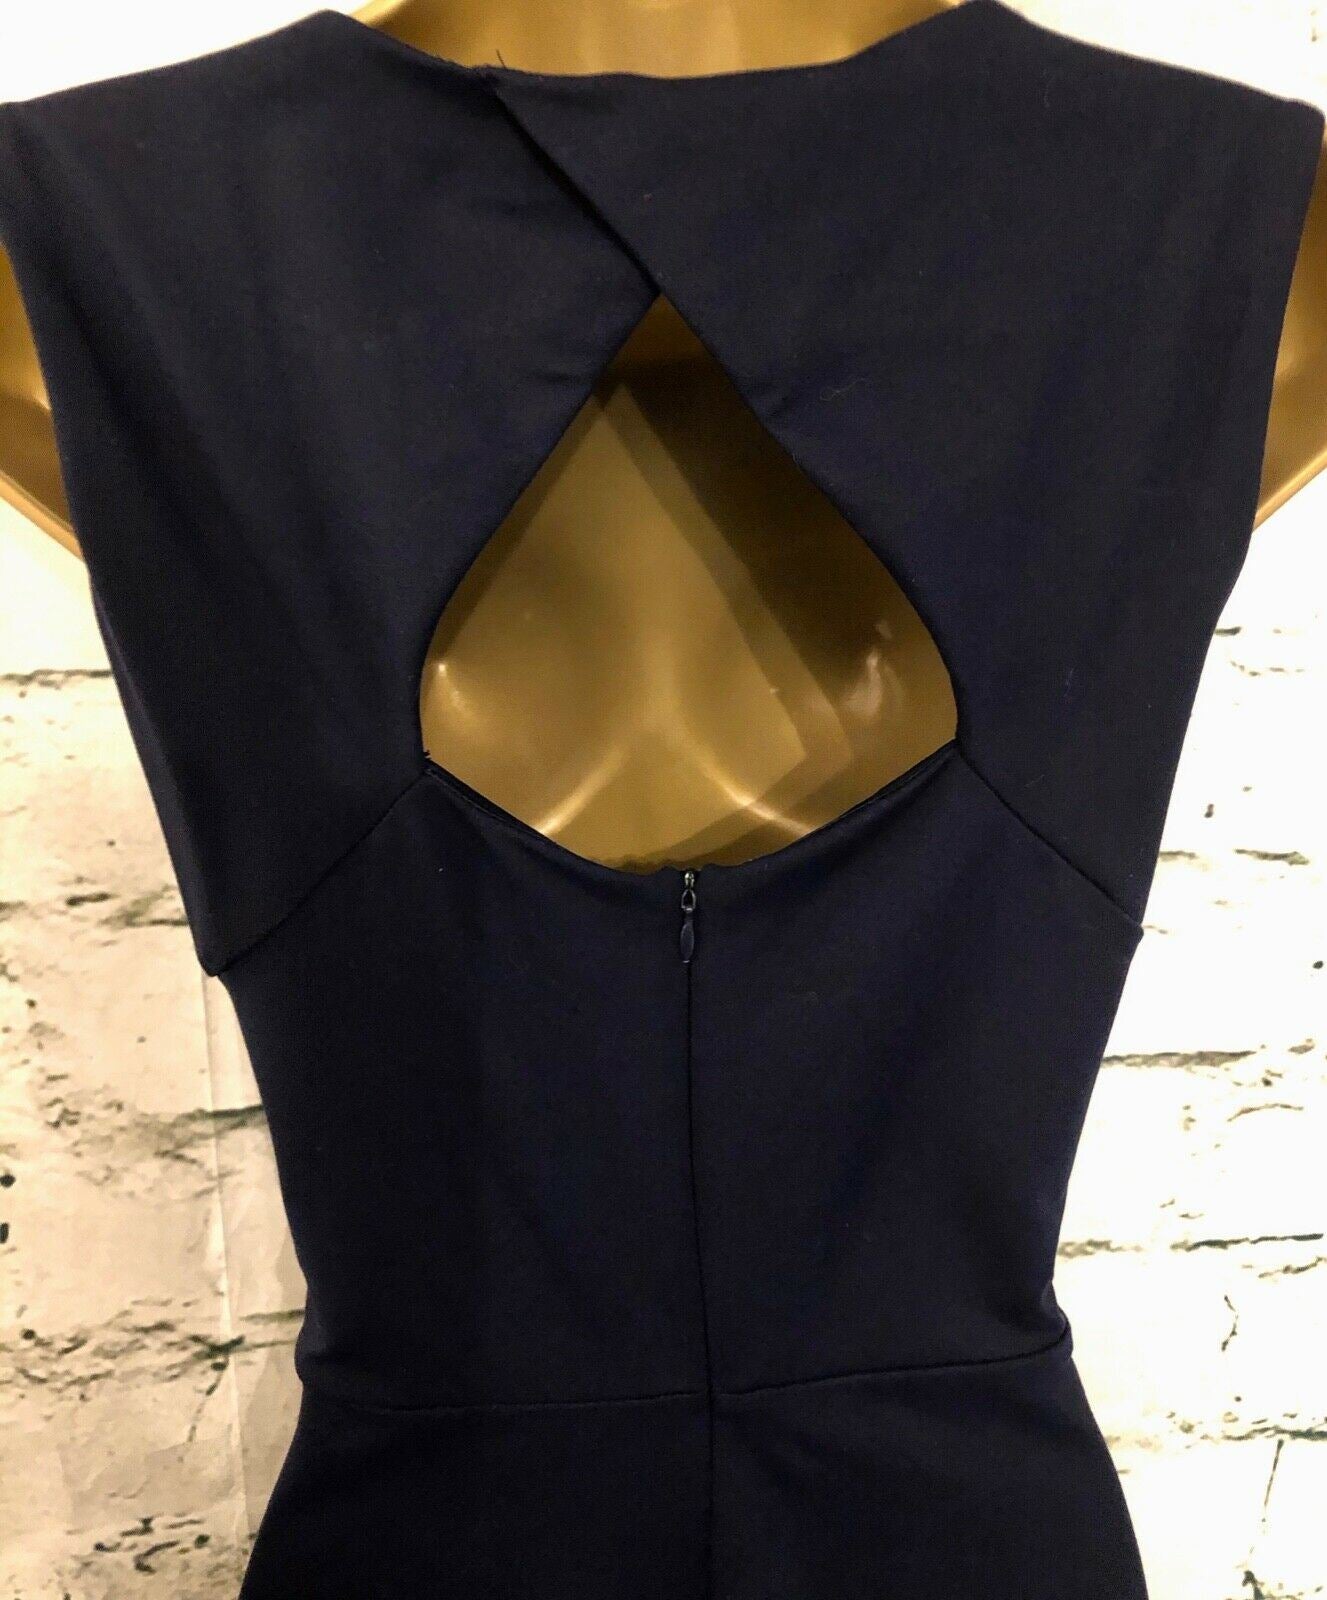 Cynthia Rowley Navy Blue Sleeveless Fit & Flare Dress UK 10 US 6 EU 38 Timeless Fashions